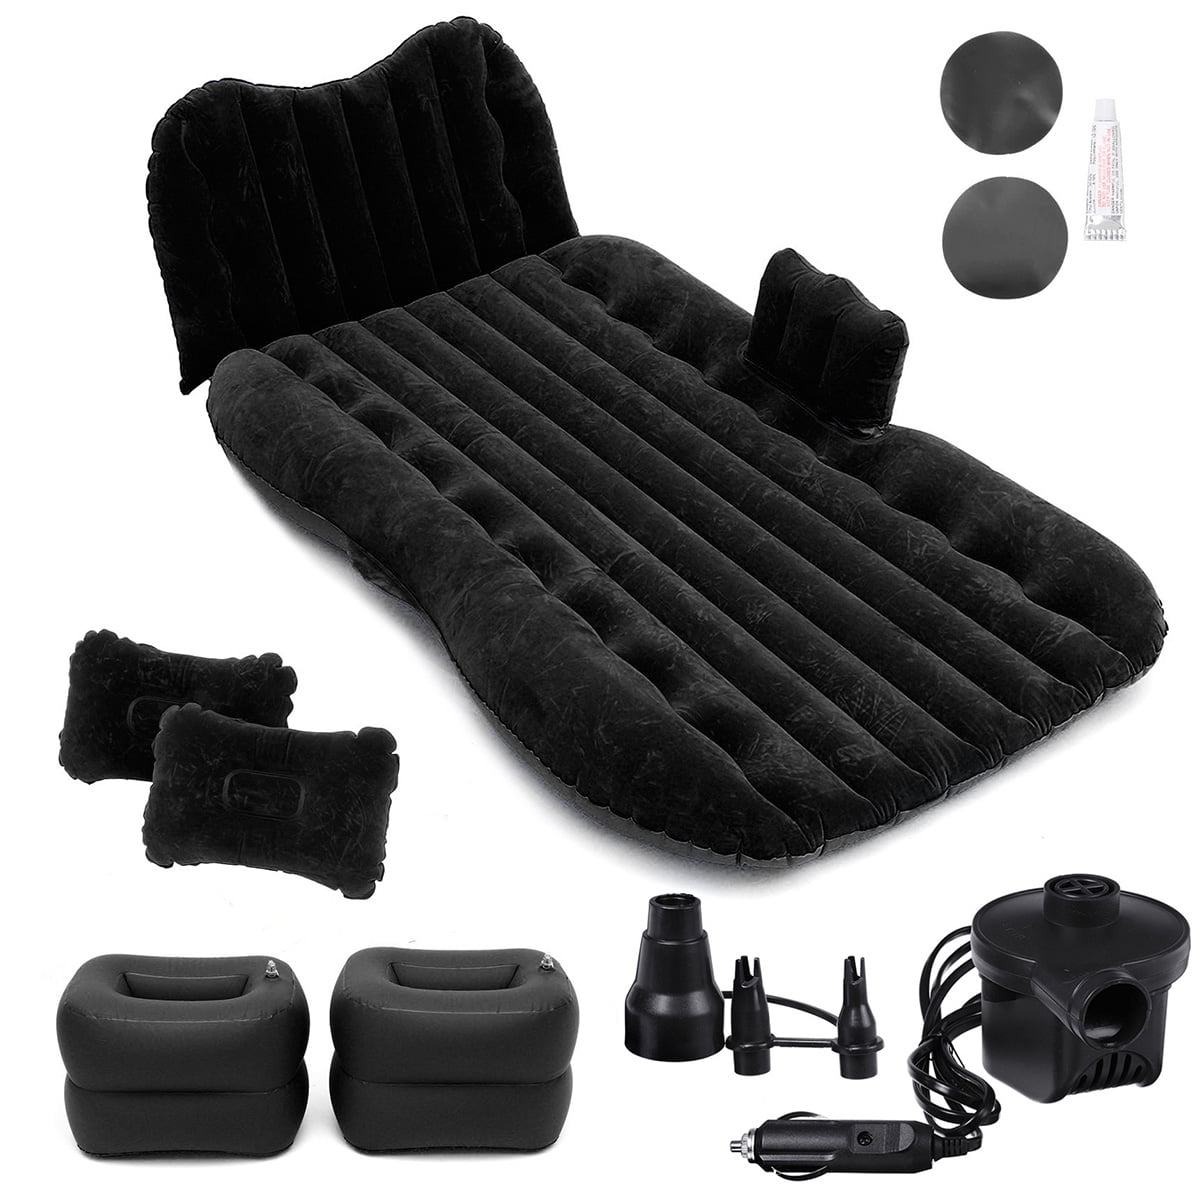 Car SUV Inflatable Air Bed Mattress Back Seat Cushion w/ Pillows Camping Travel 